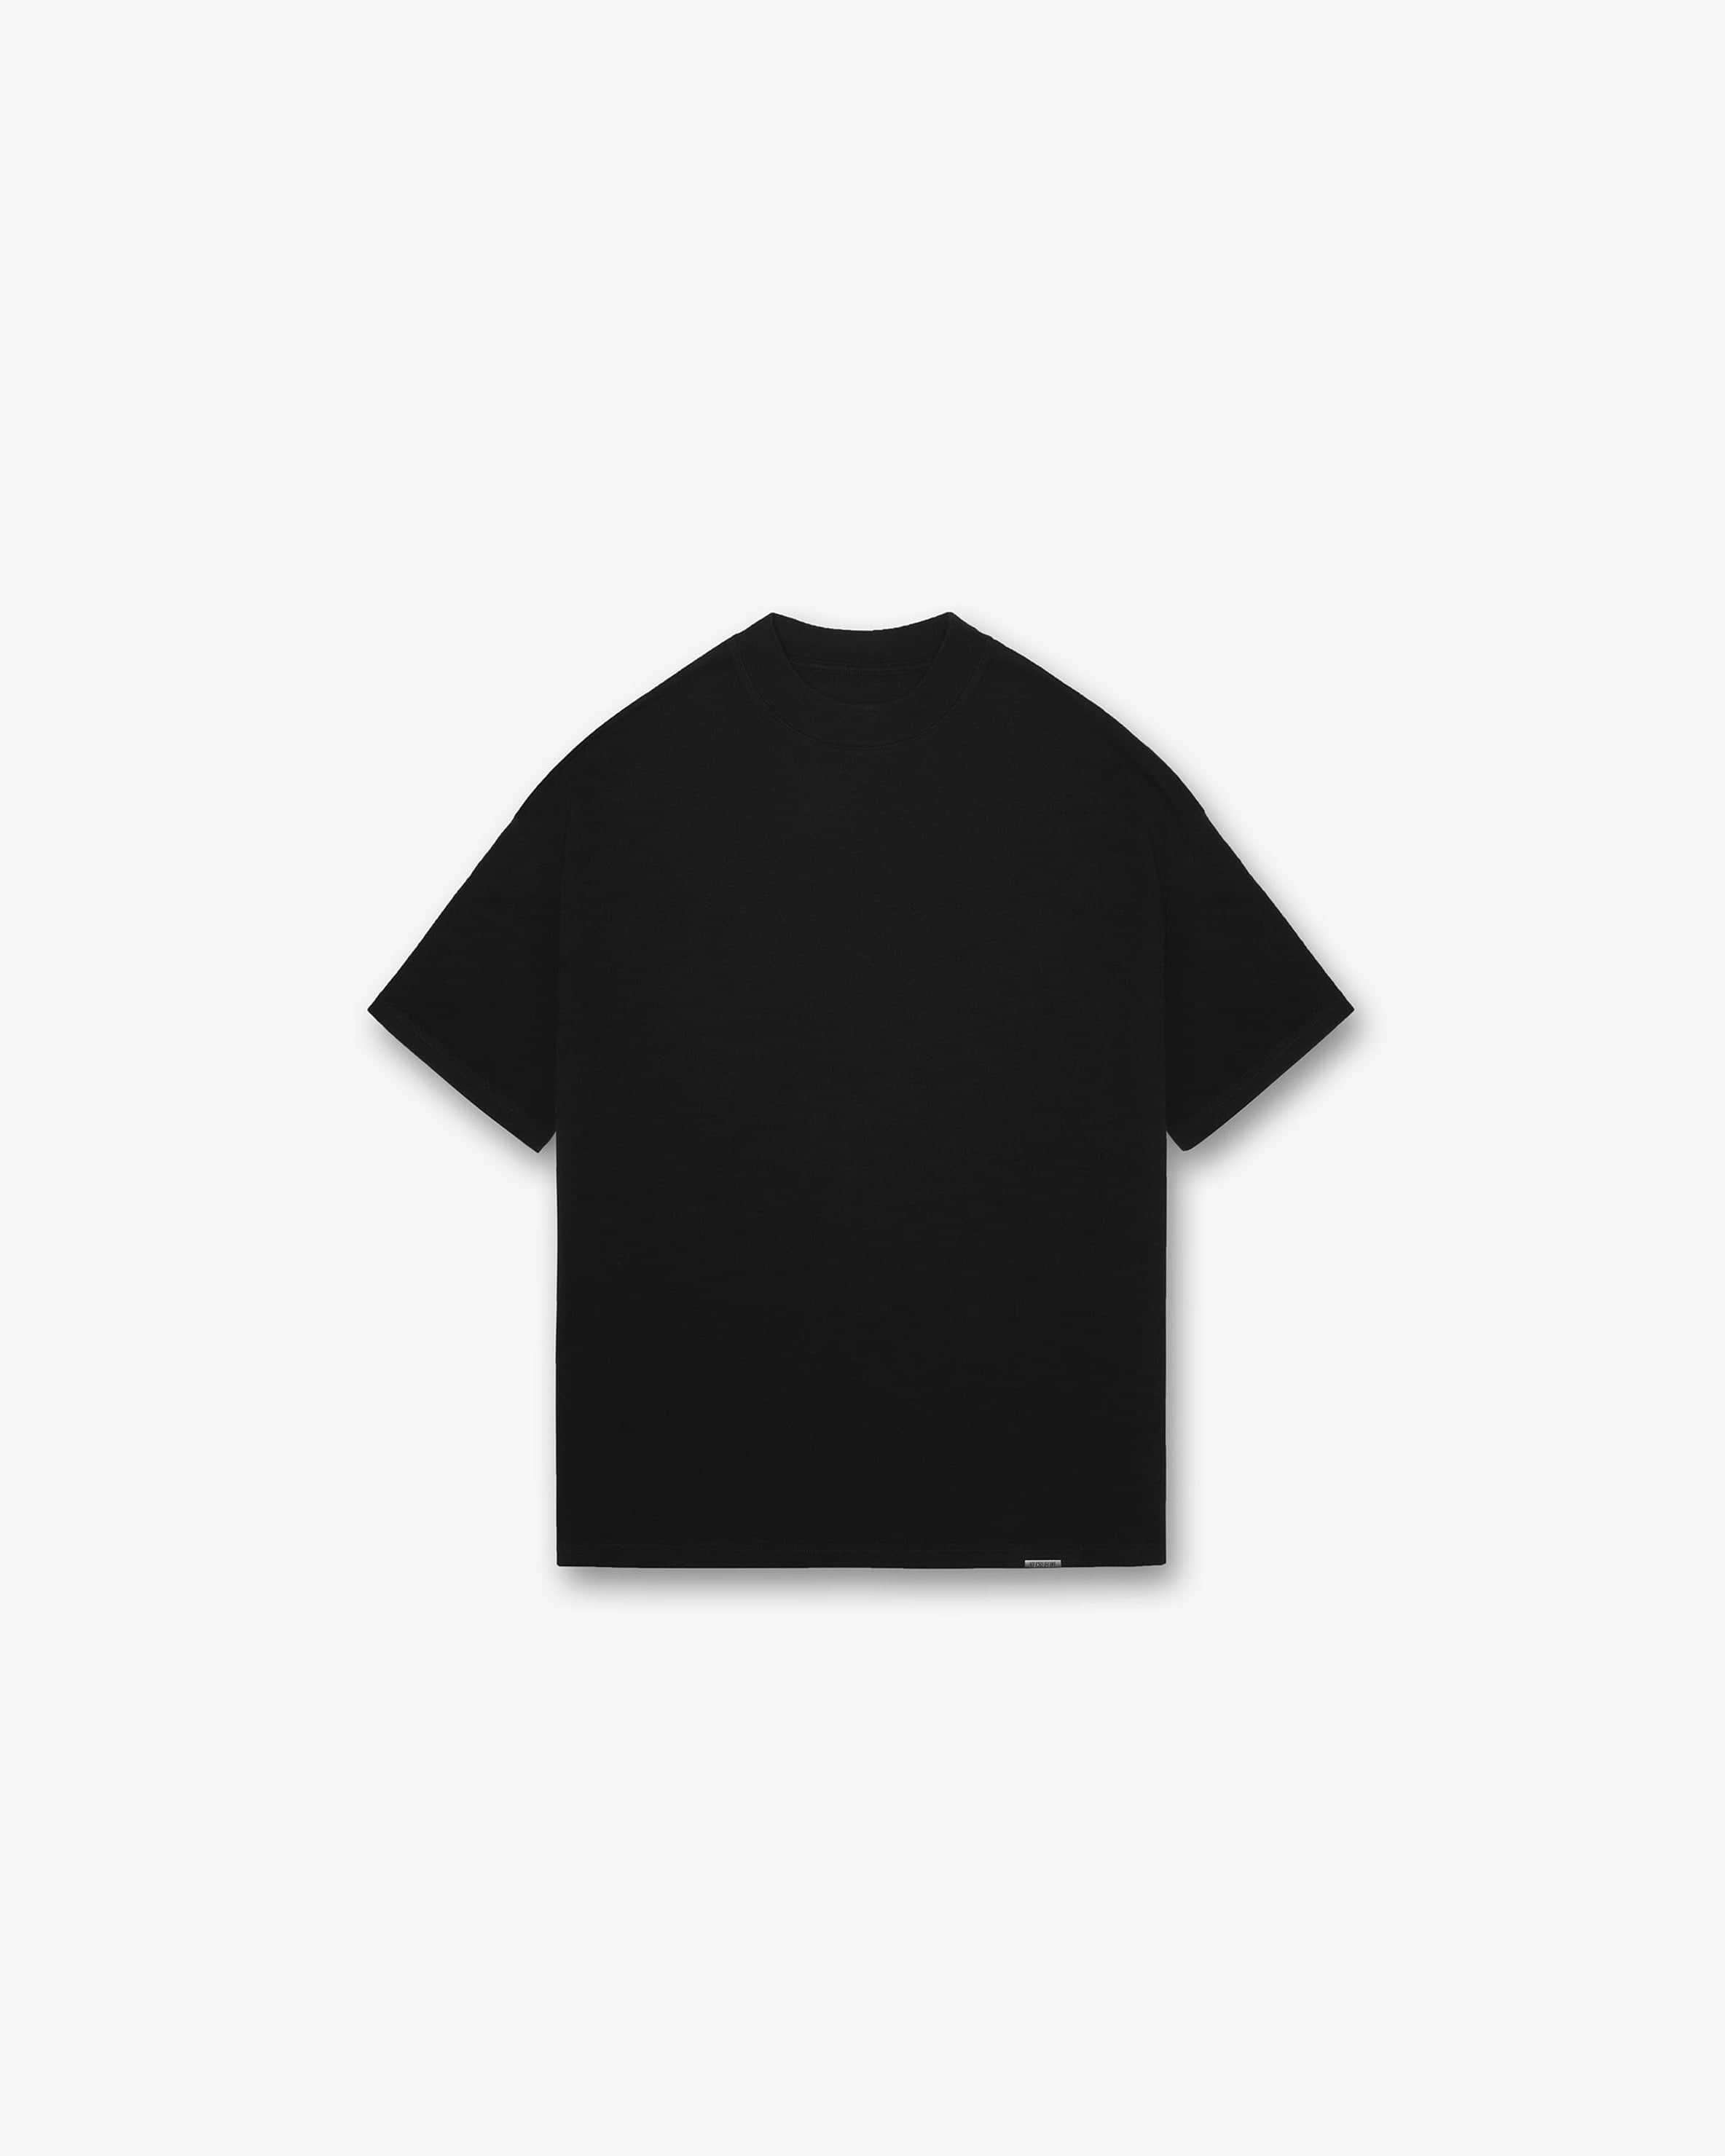 Jet Black T-Shirt | Blank | REPRESENT CLO